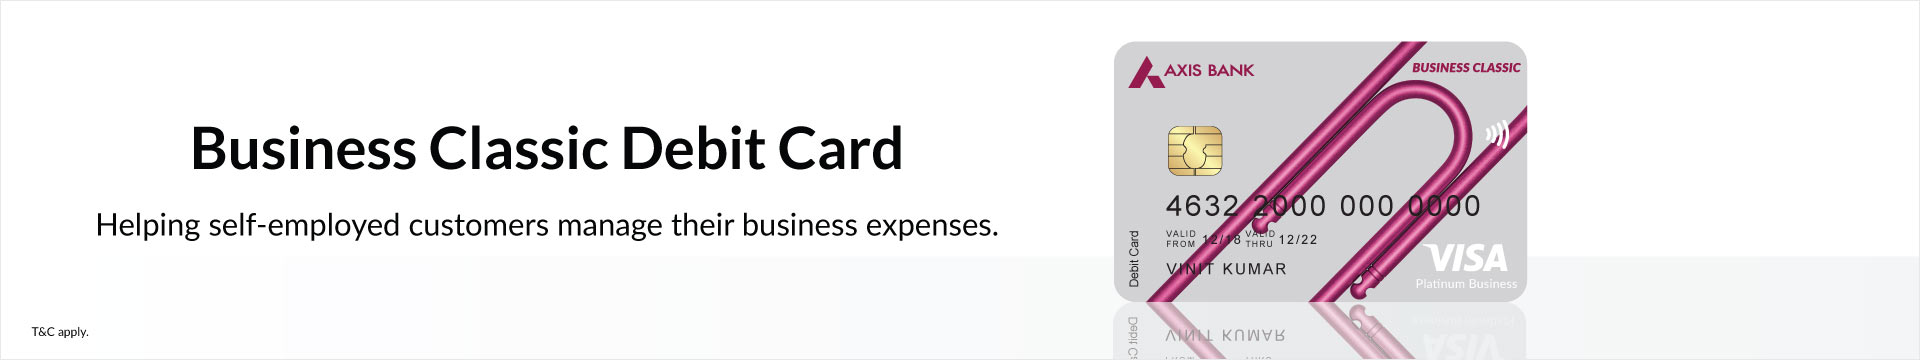 Business Classic Debit Card